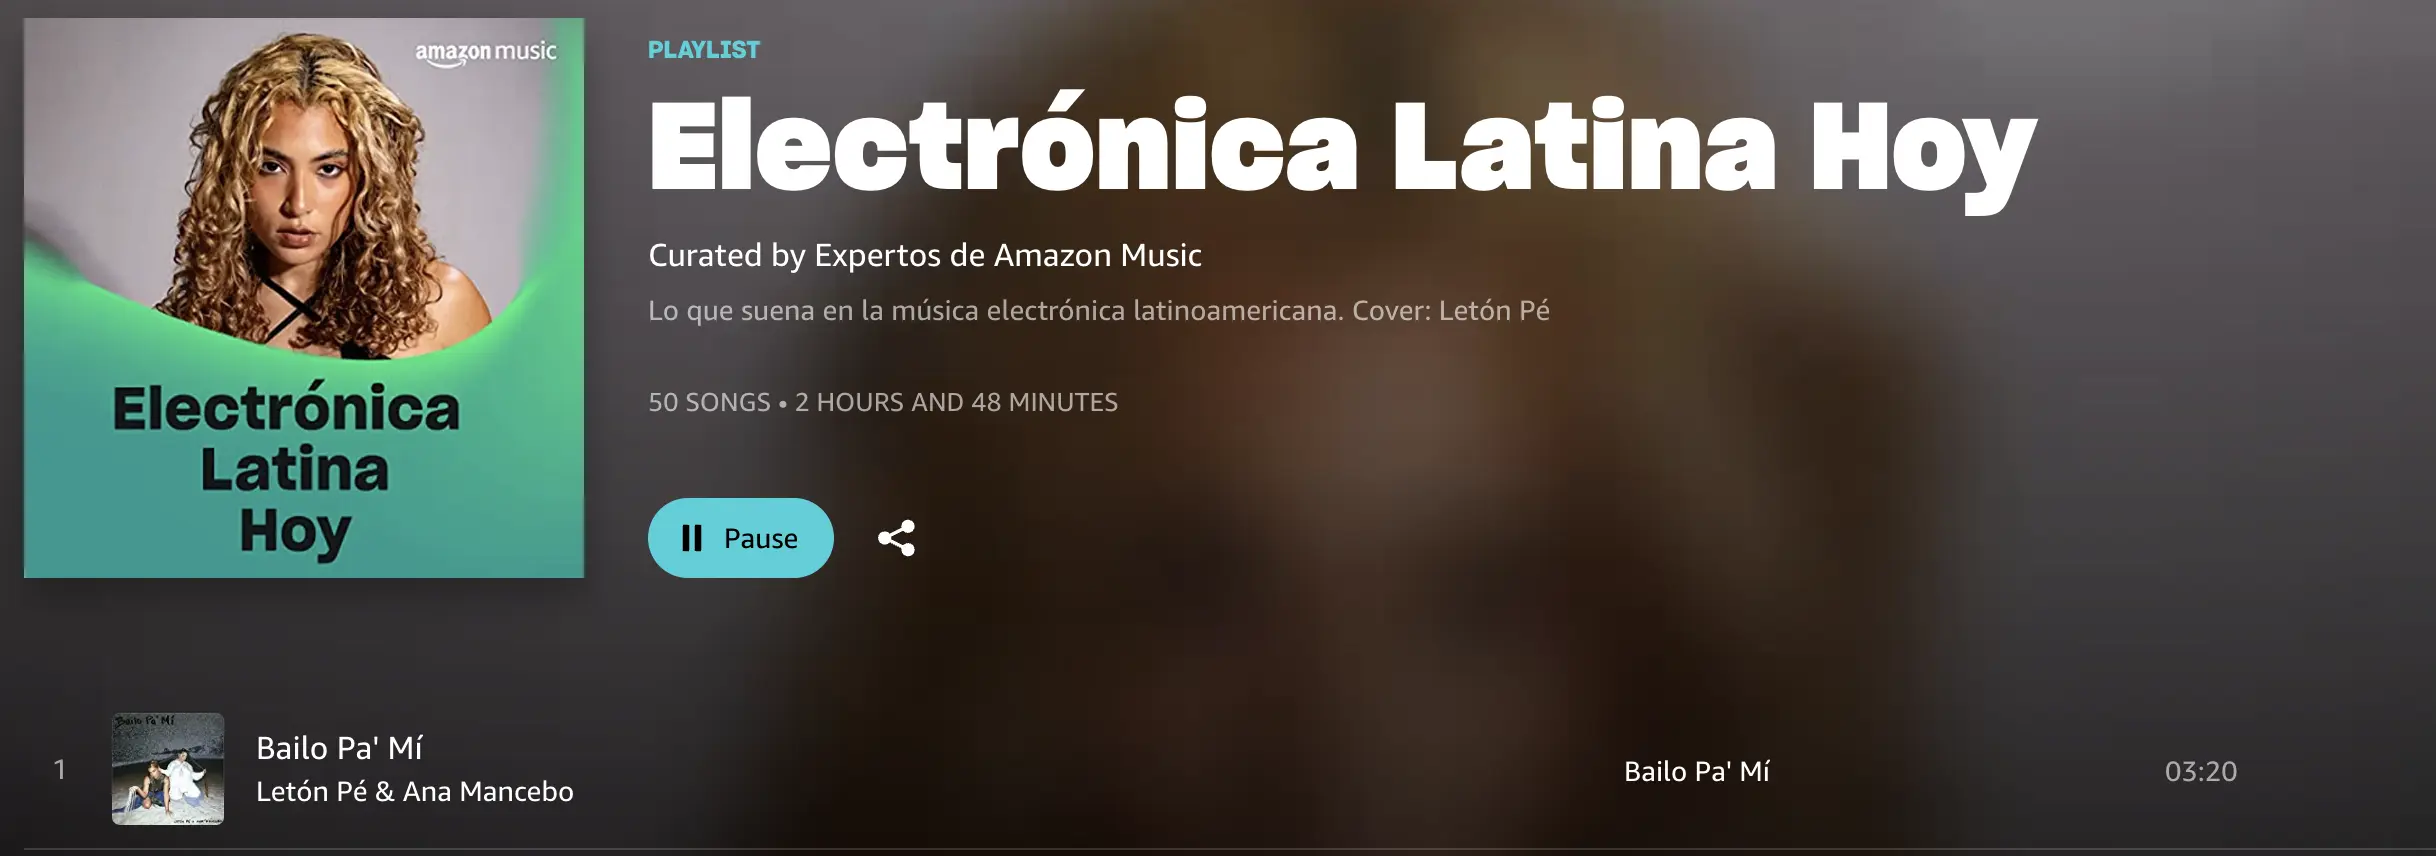 Electronica hoy - screenshot thumbnail featuring Grace Gaustad.